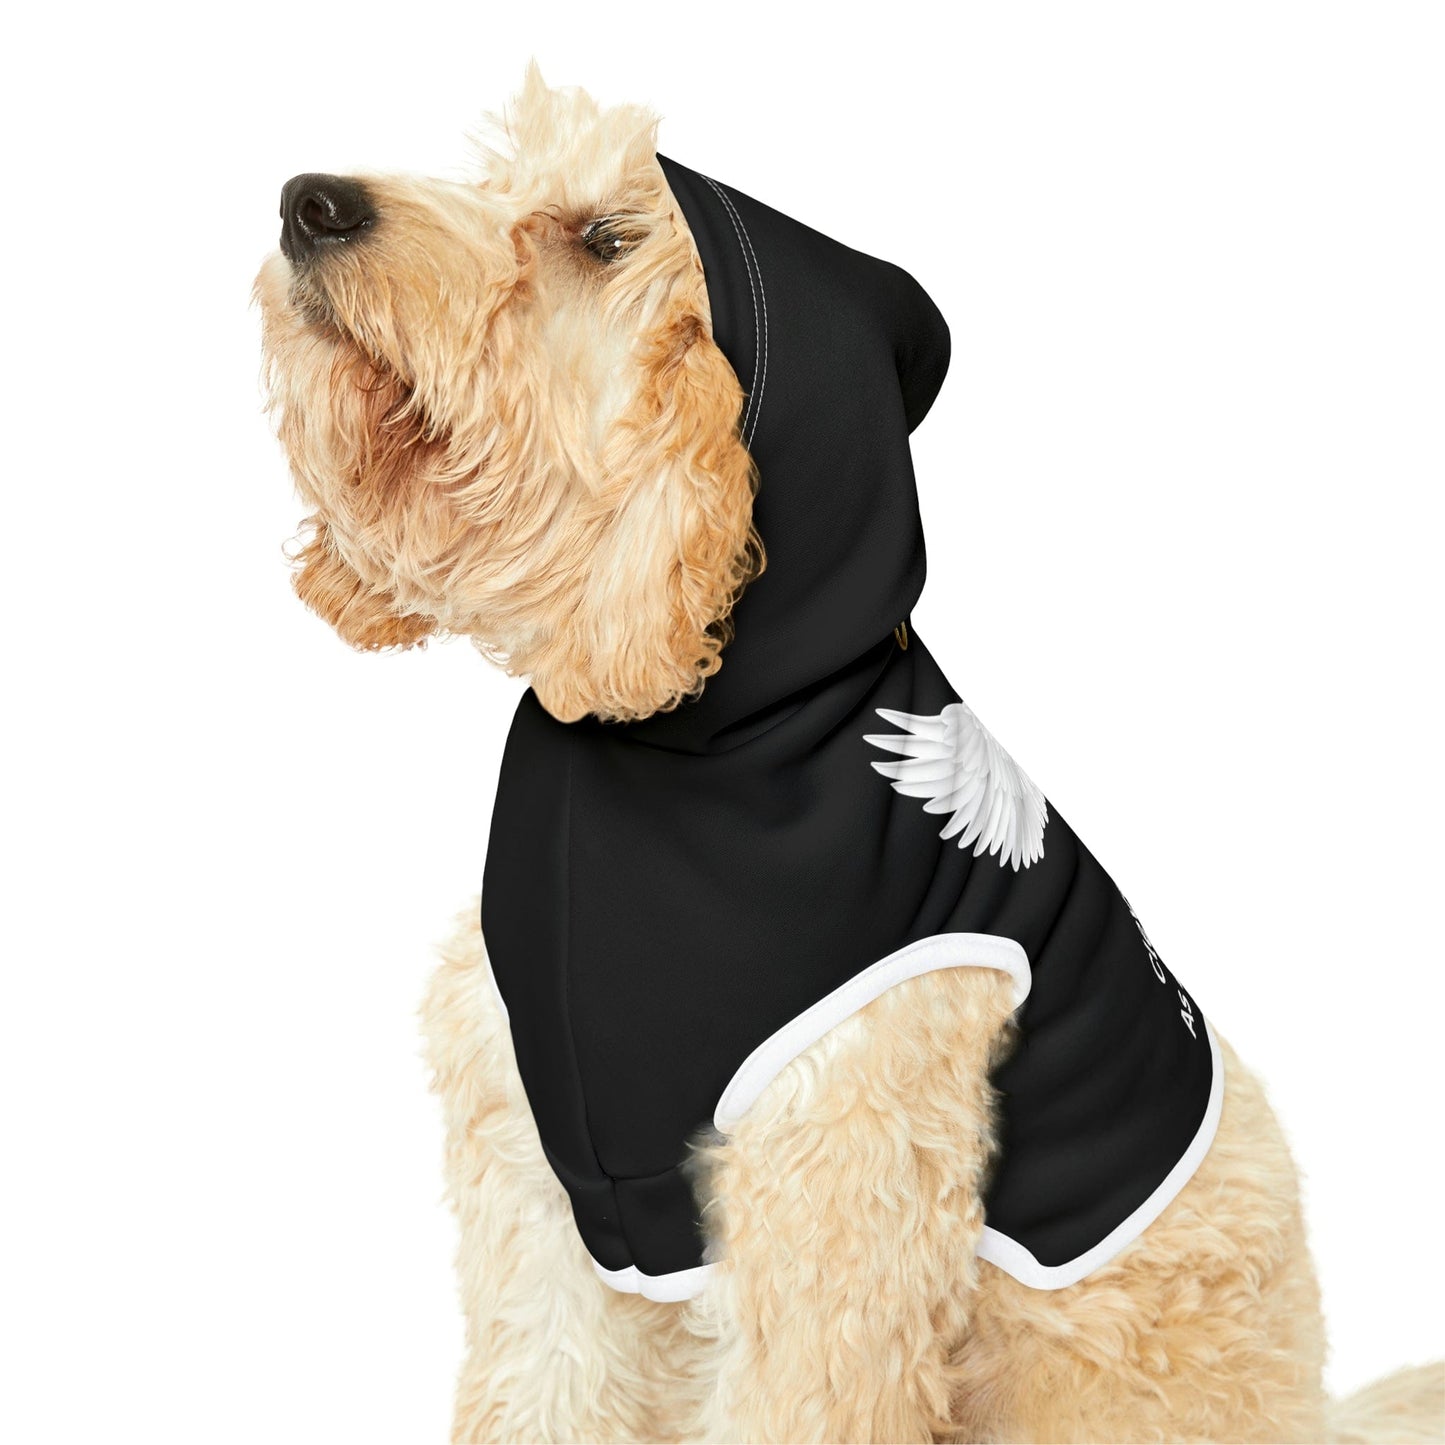 Personalized Dog Hoodie-Dog Angel Sweatshirt-Dog Clothes-Puppy Clothes-Funny Dog Shirt-Personalized Dog Clothes Gift